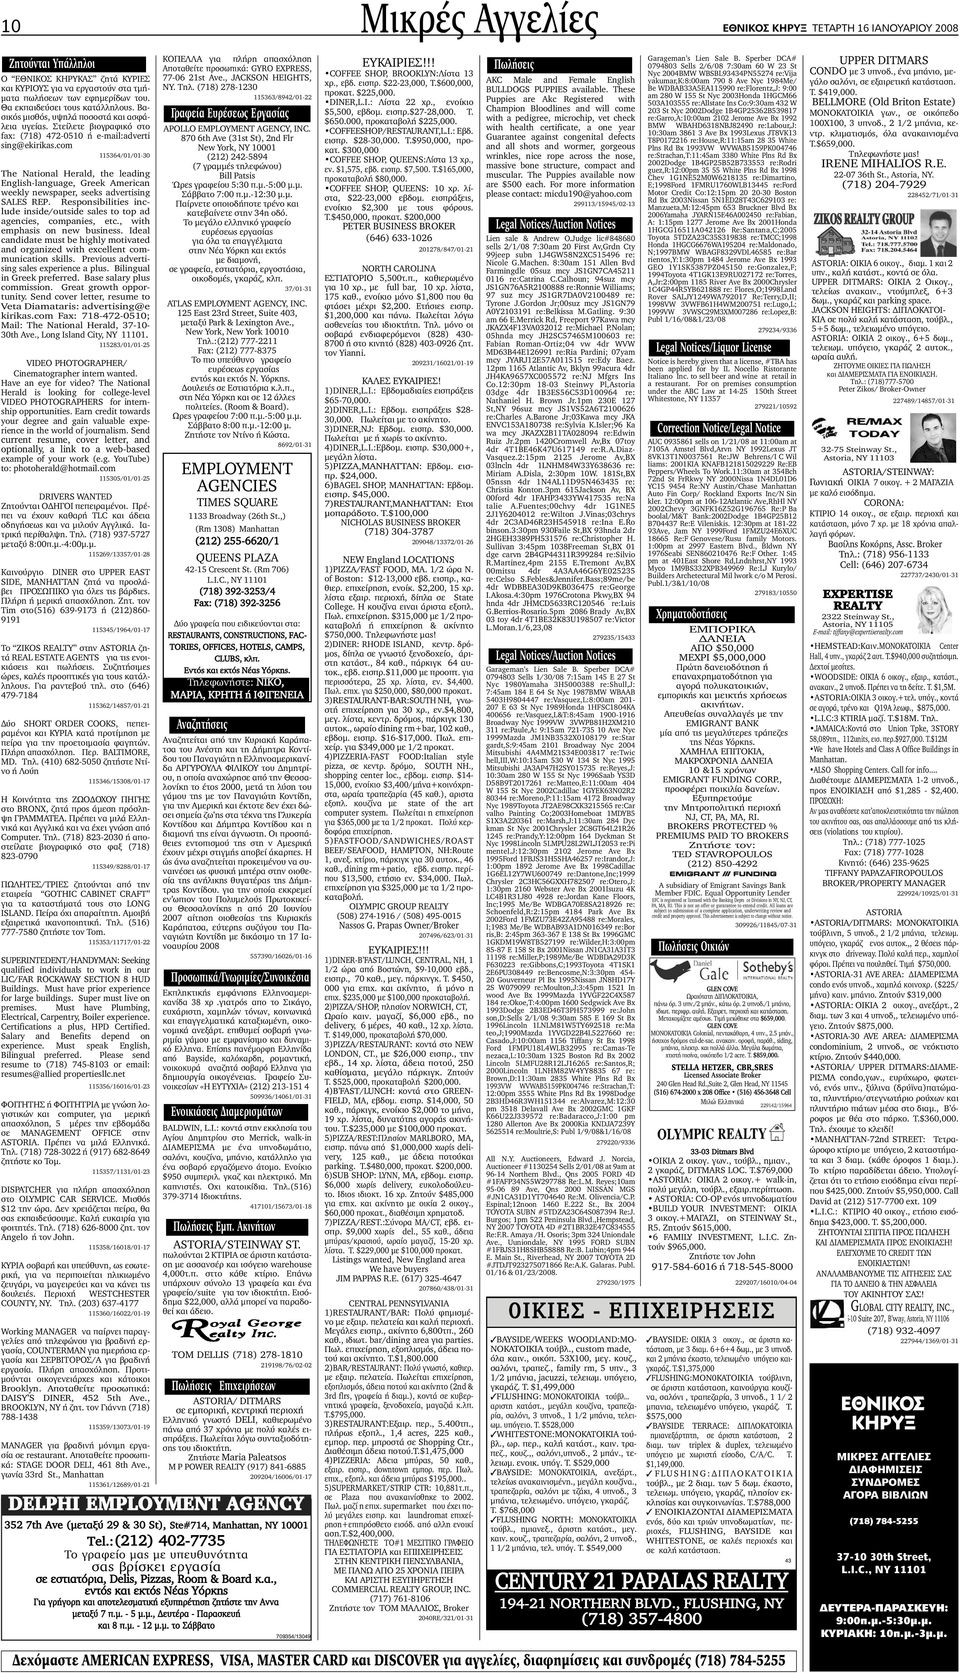 com 115364/01/01-30 The National Herald, the leading English-language, Greek American weekly newspaper, seeks advertising SALES REP.